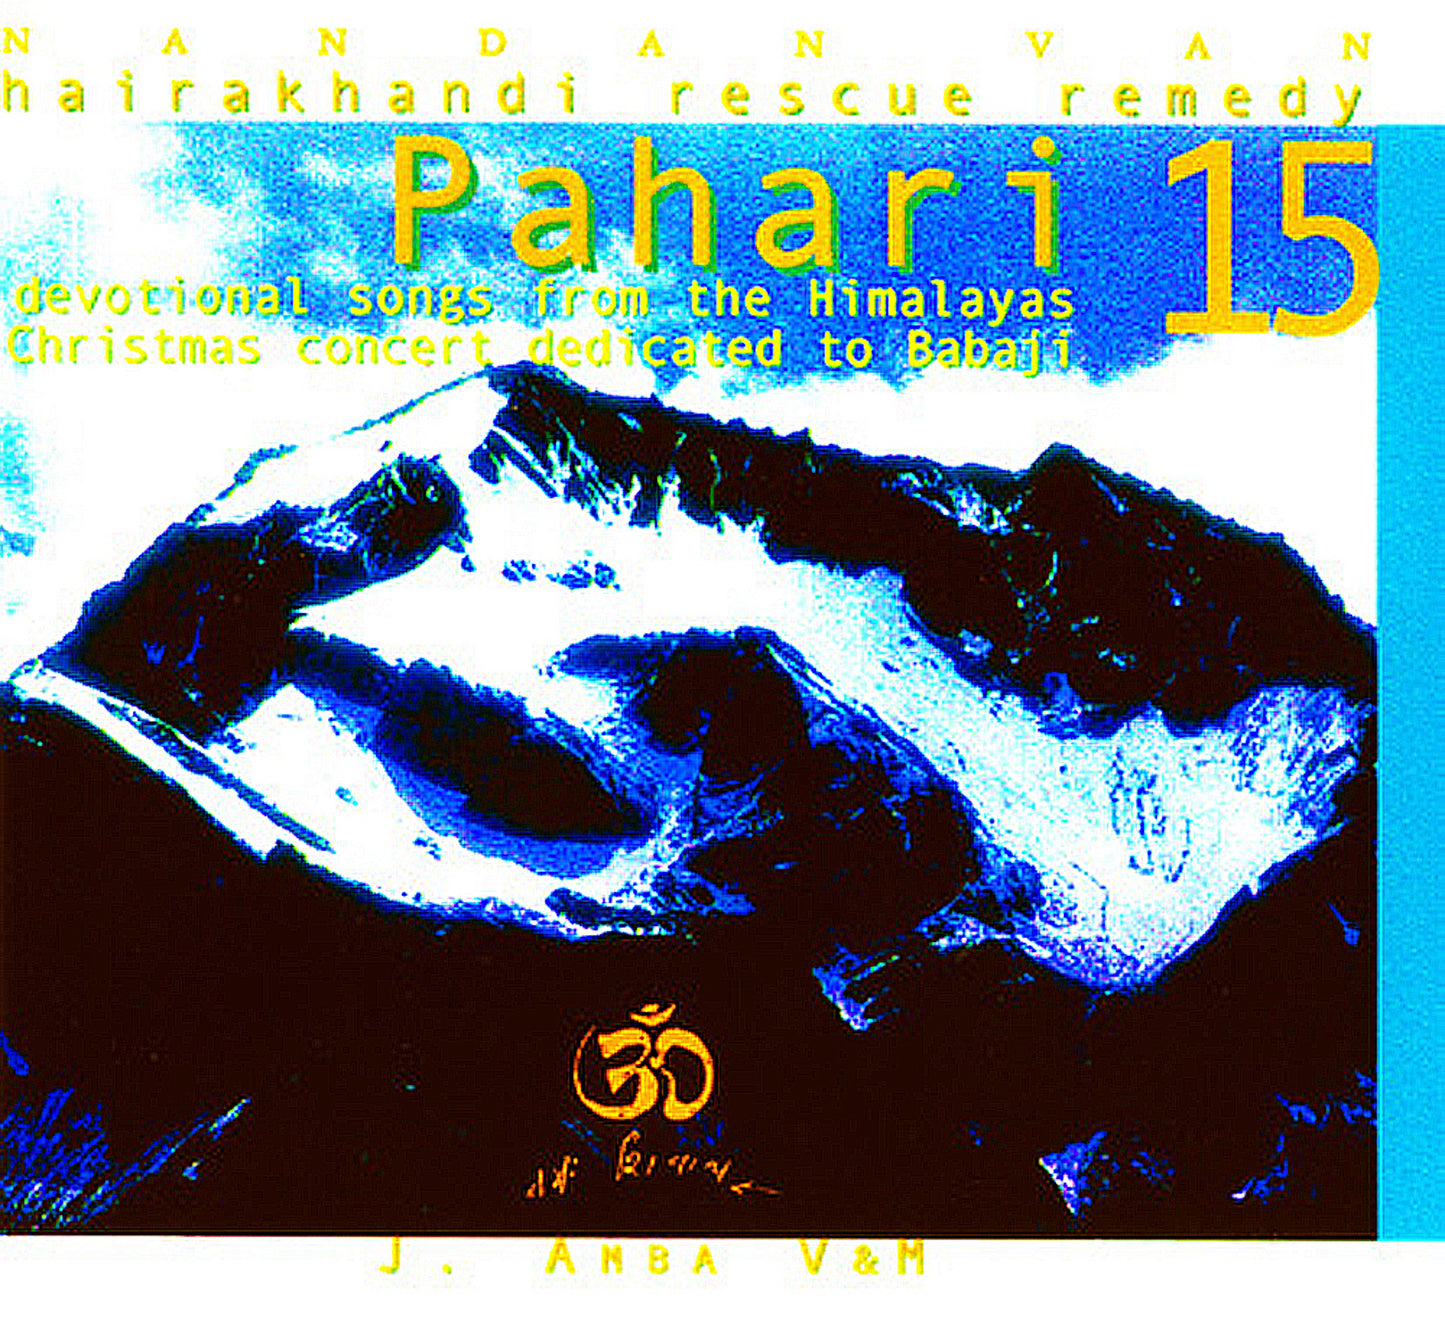 Pahari, Devotional Songs from the Himalayas - Hairakhandi Rescue Remedy 15 - Hindu Sanatan Dharma Spirituality Music Therapy for Meditation